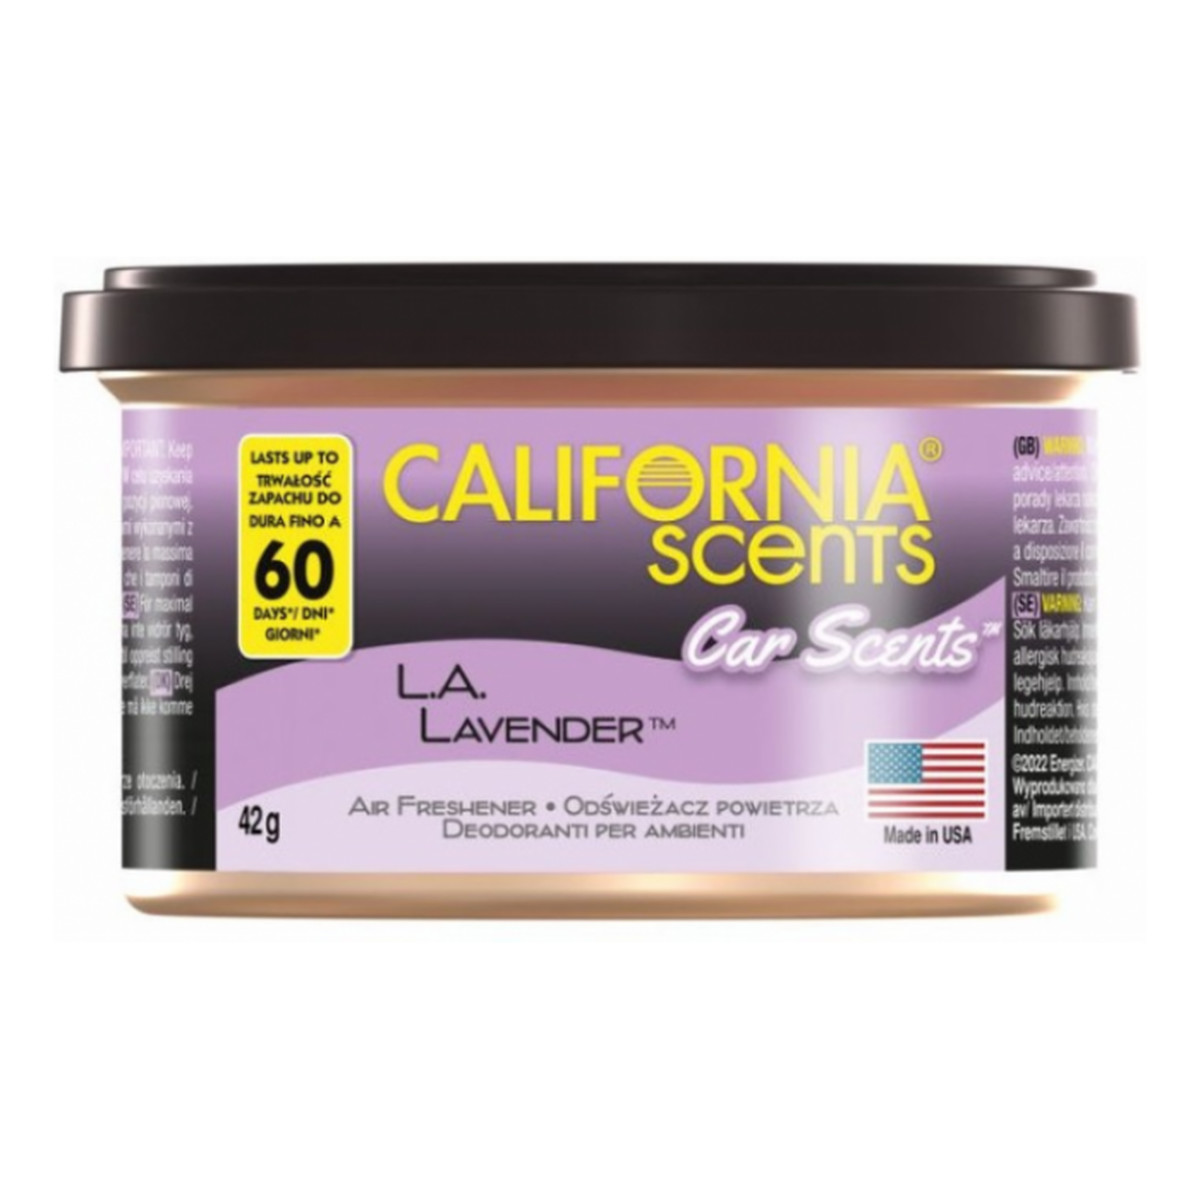 California Scents Car Scents Zapach Lavender 42g